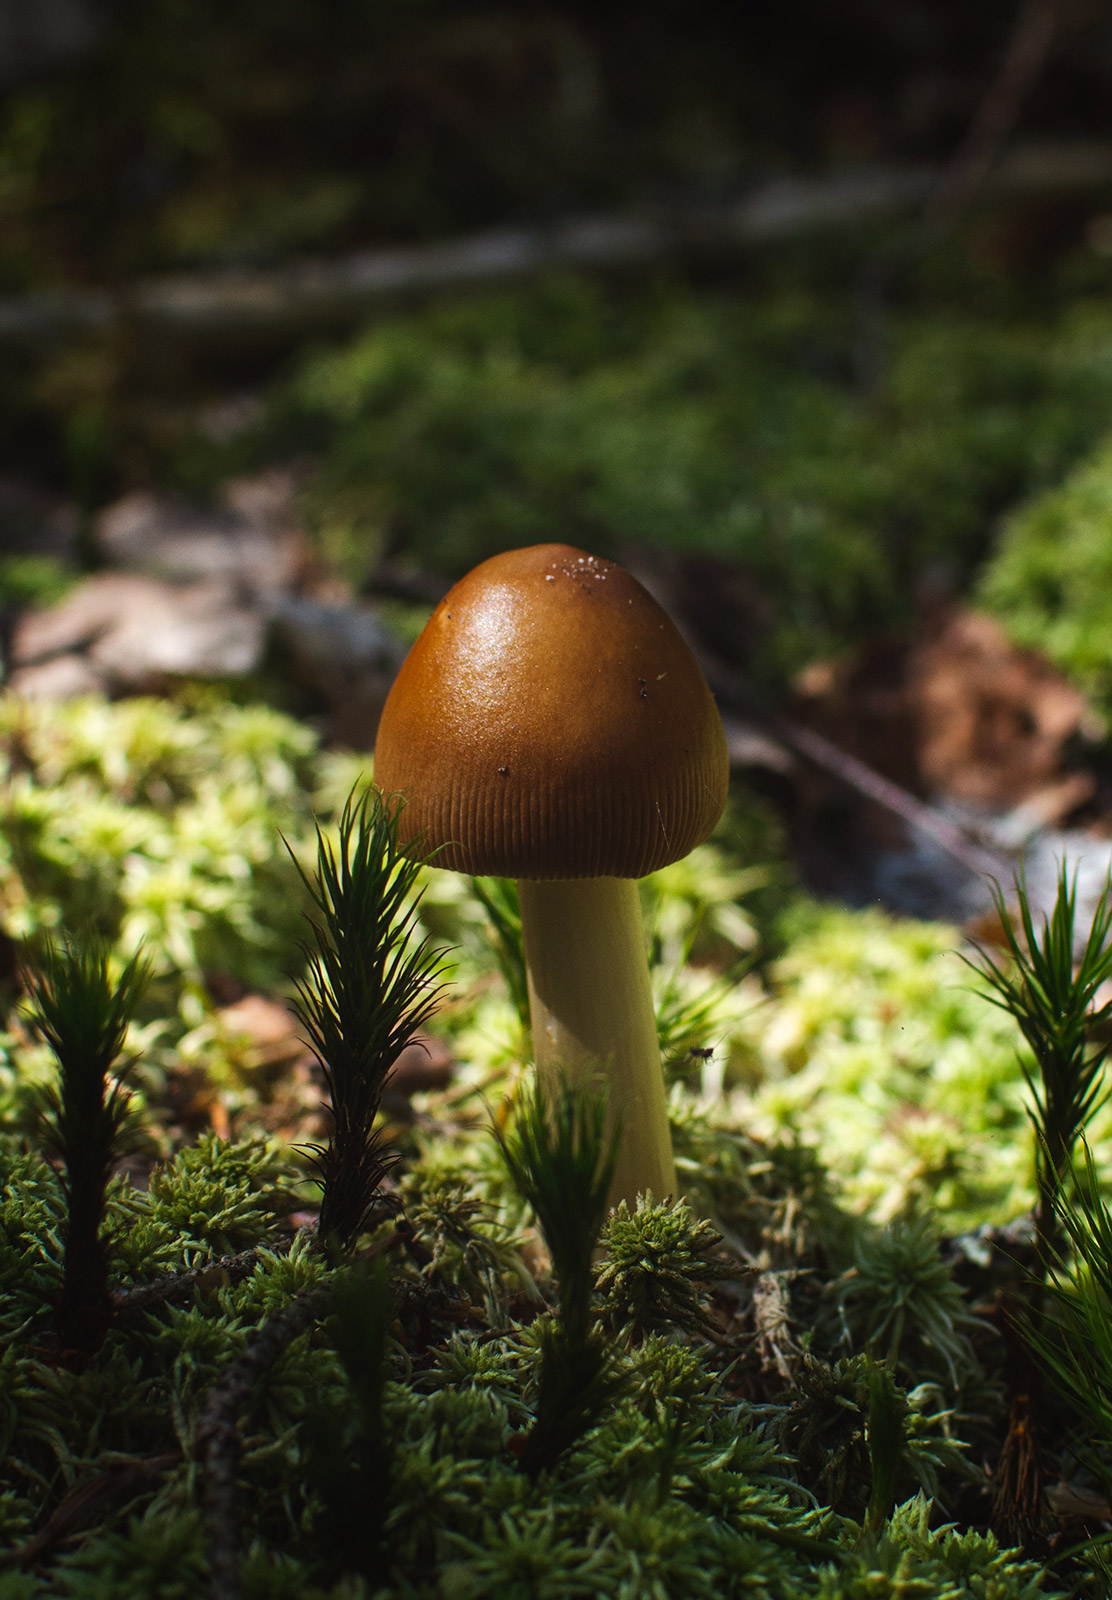 Mushroom in the sun